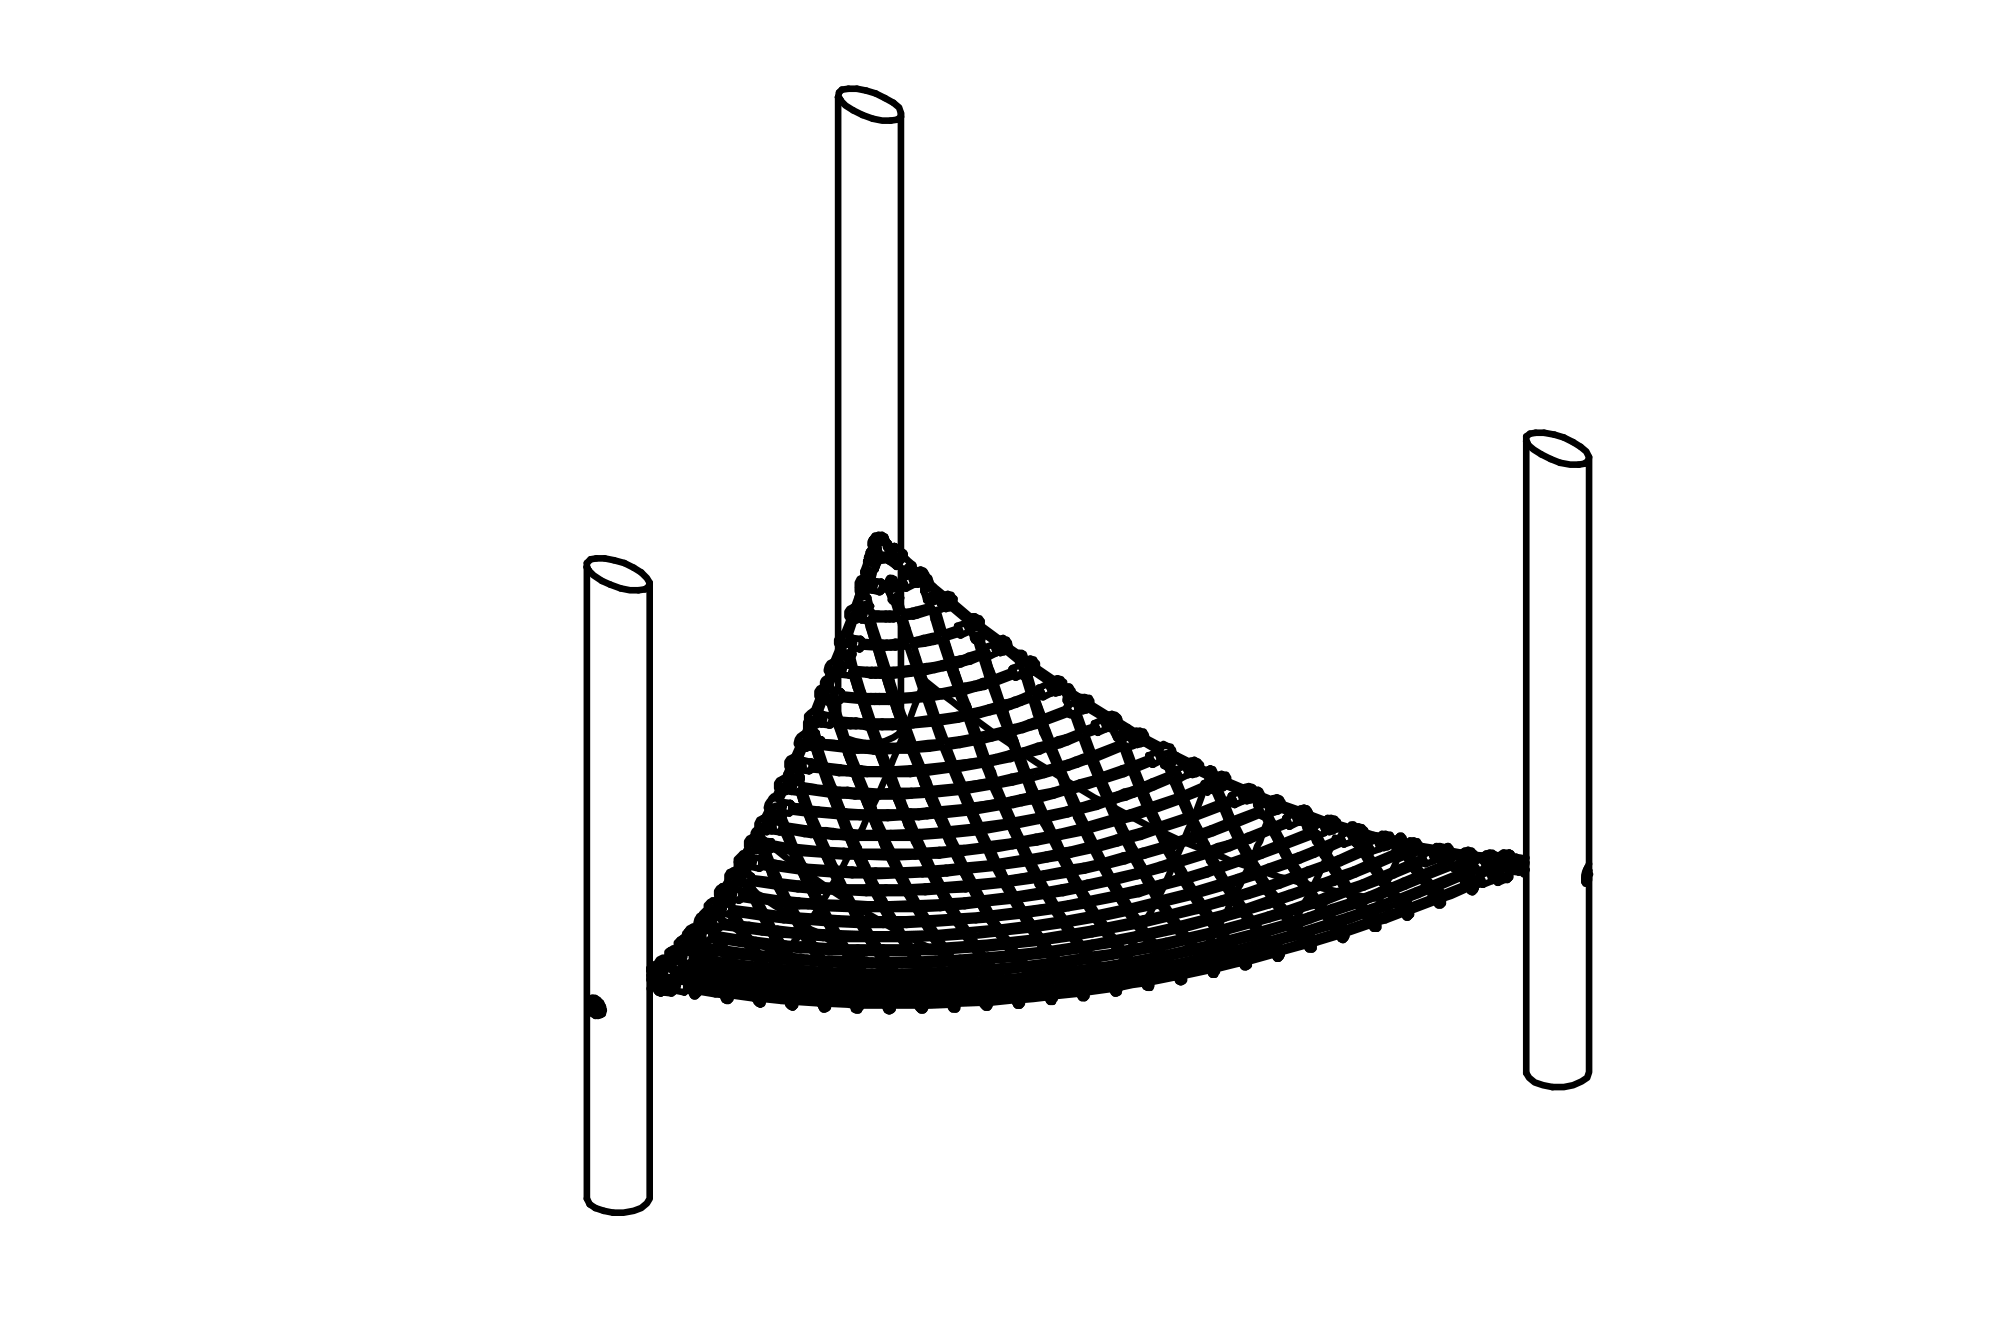 Horizontal triangular net, fine meshed